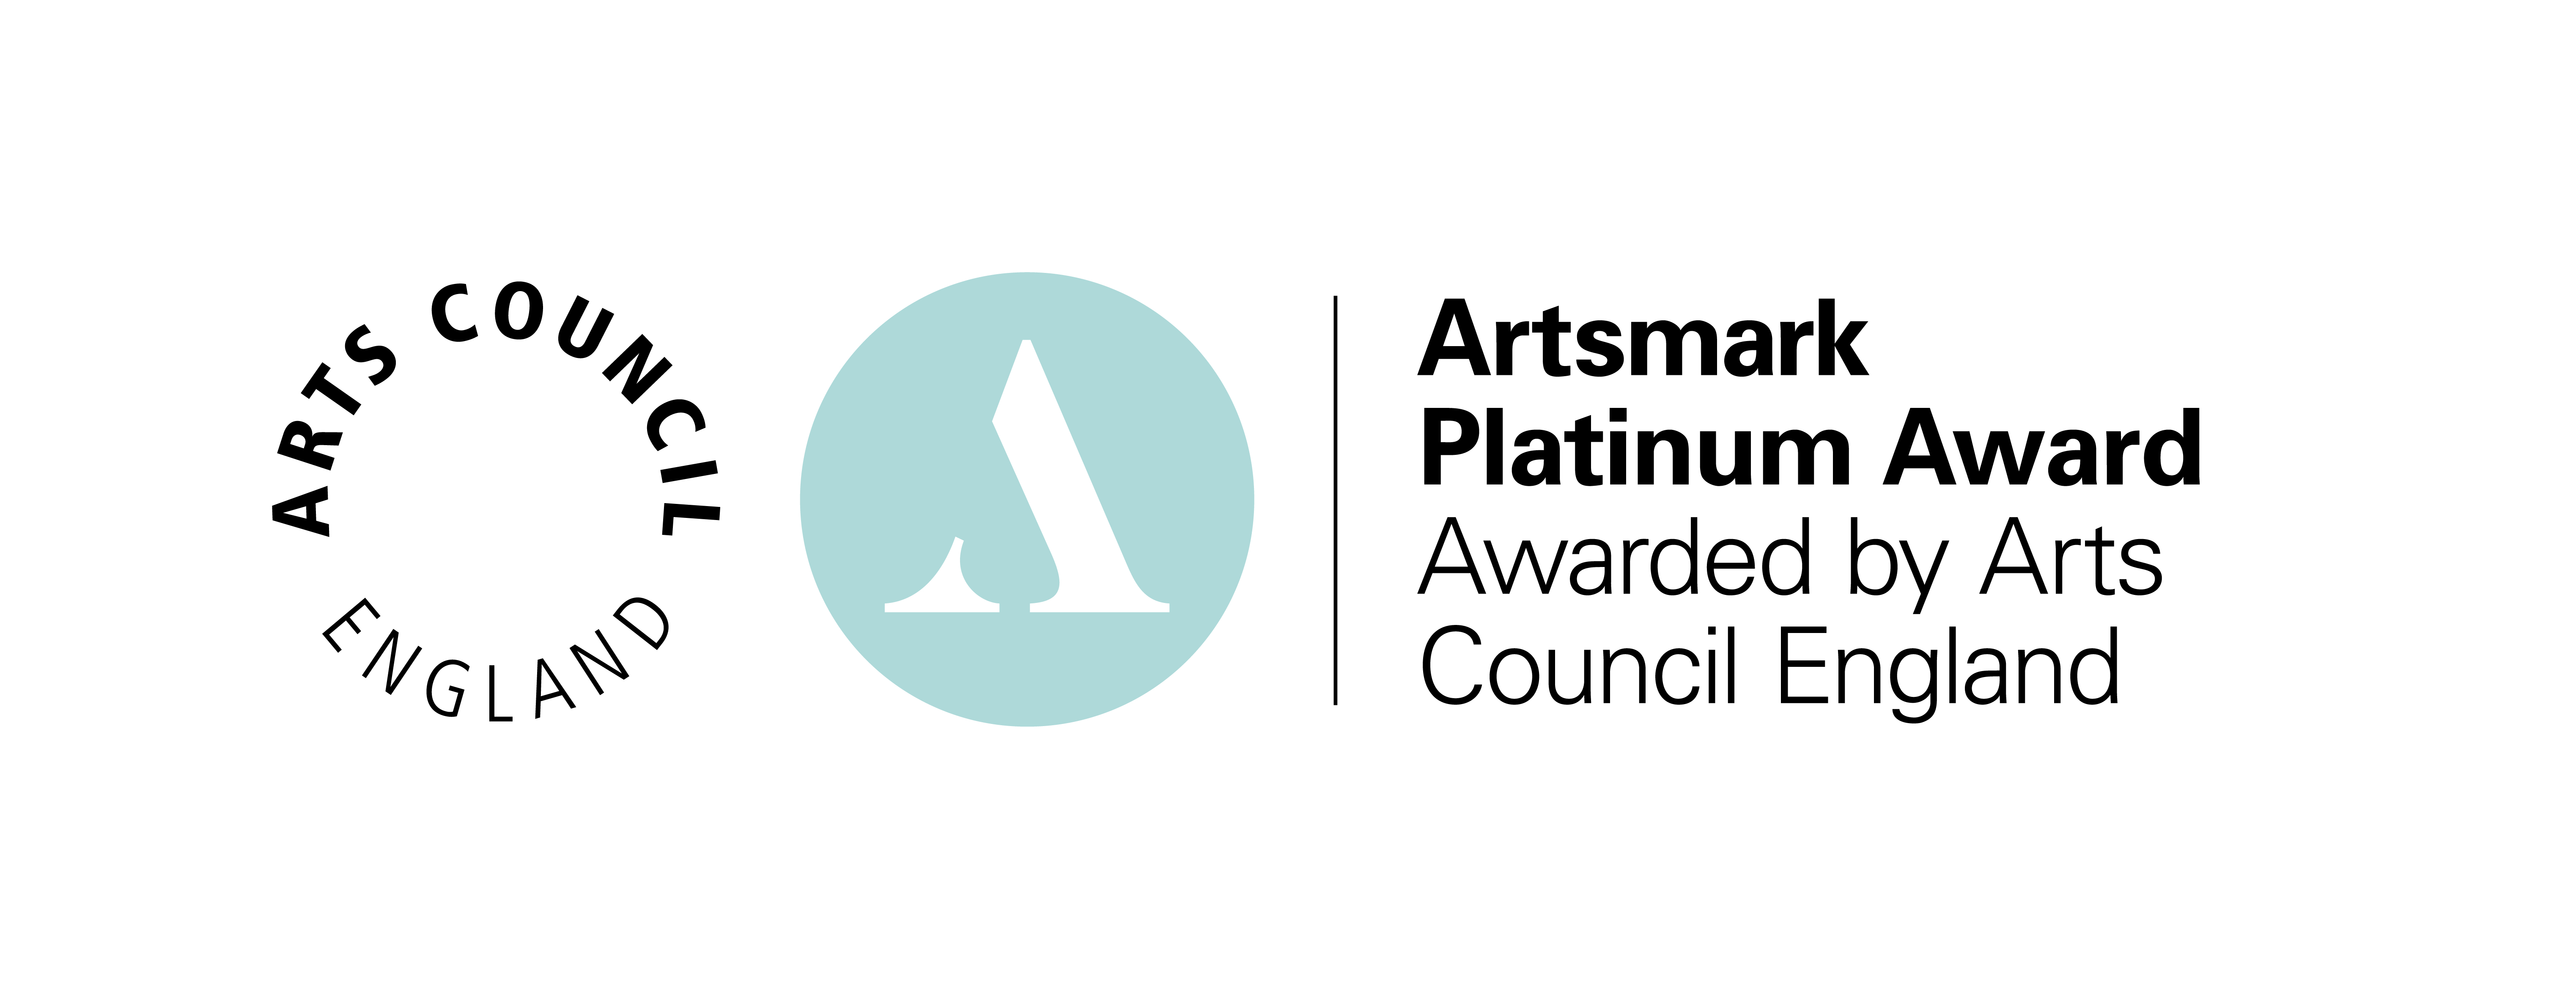 artsmark platinum award